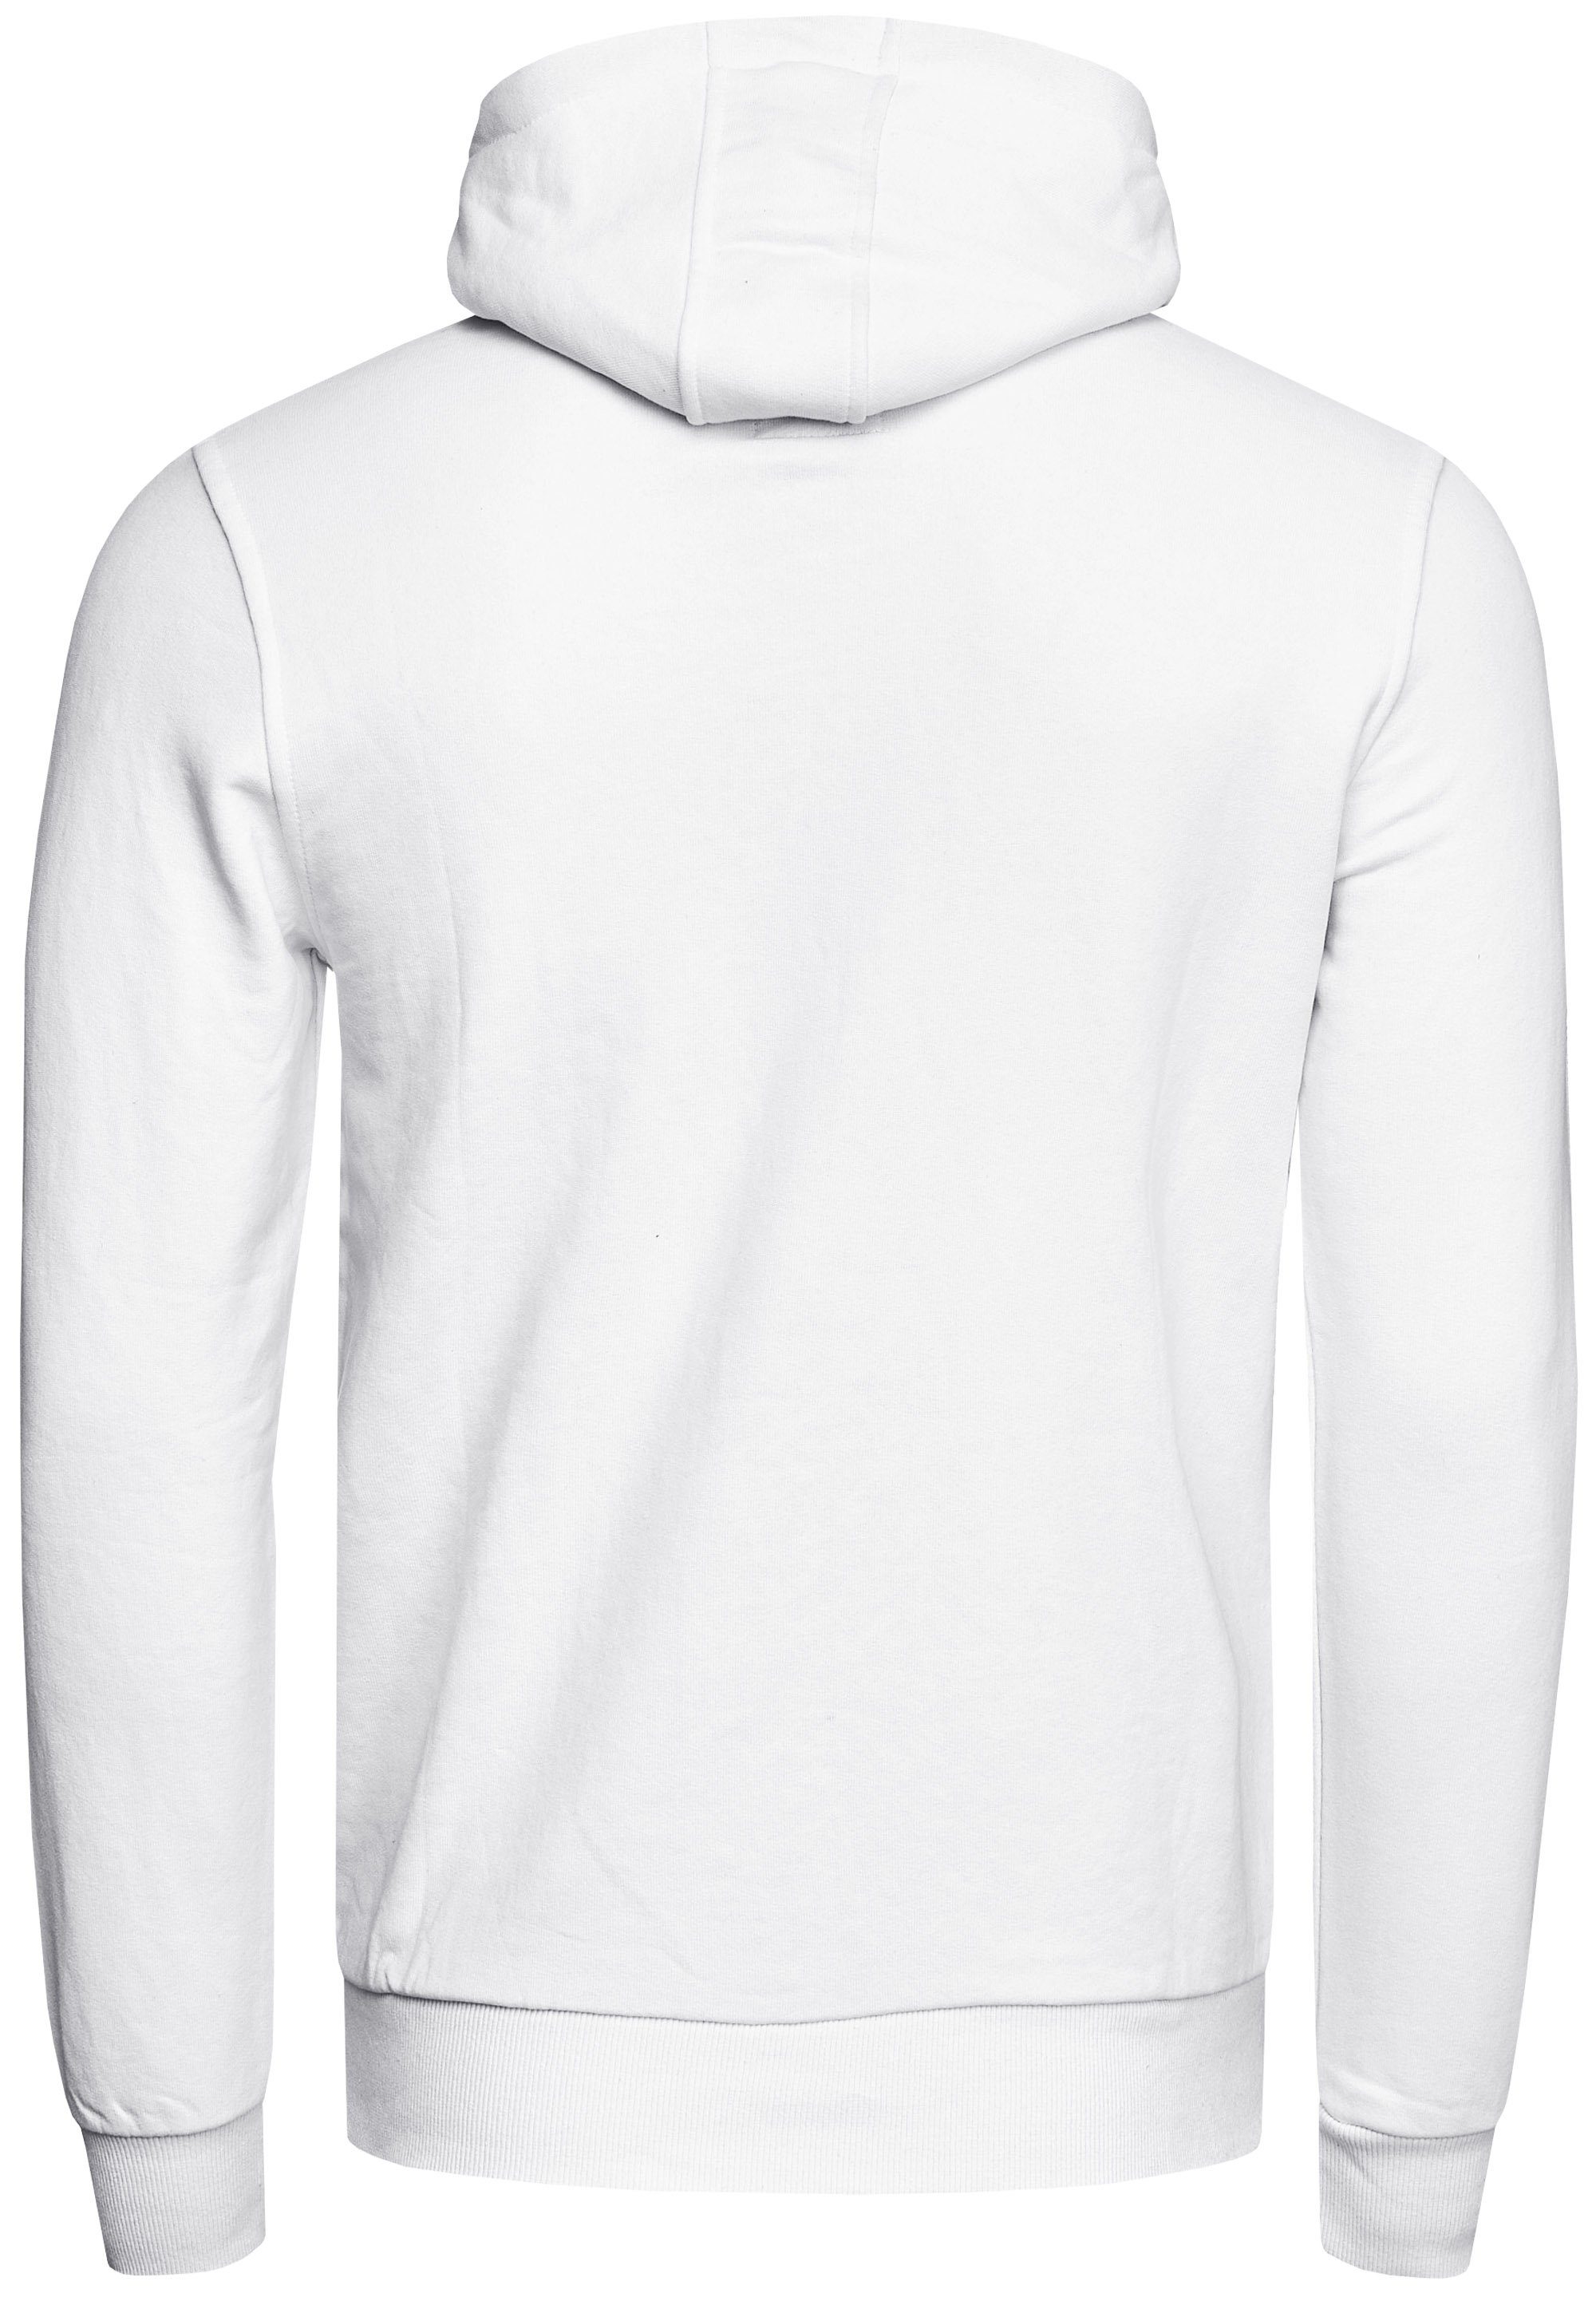 Rusty Neal Kapuzensweatshirt 2020 mit weiß Kapuze cooler